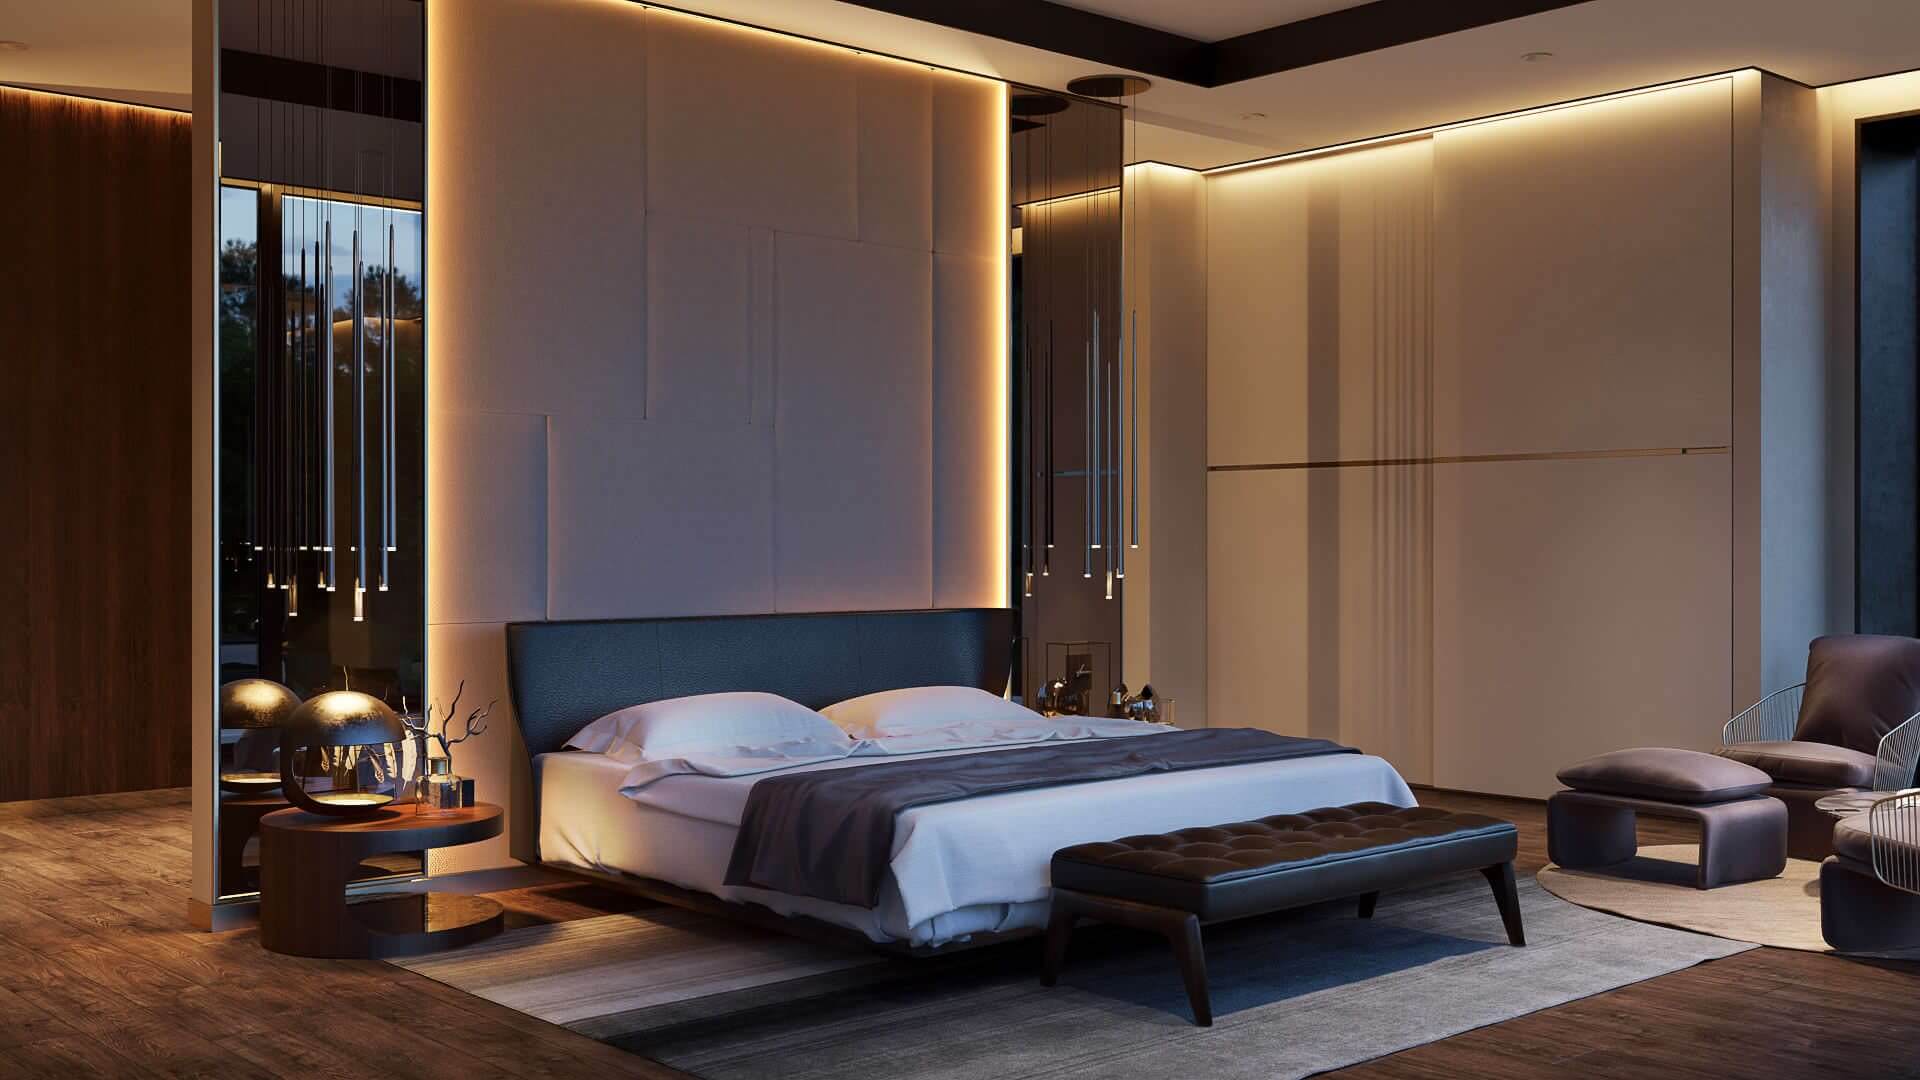 Nighttime CG Image of an Elegant Modern Bedroom